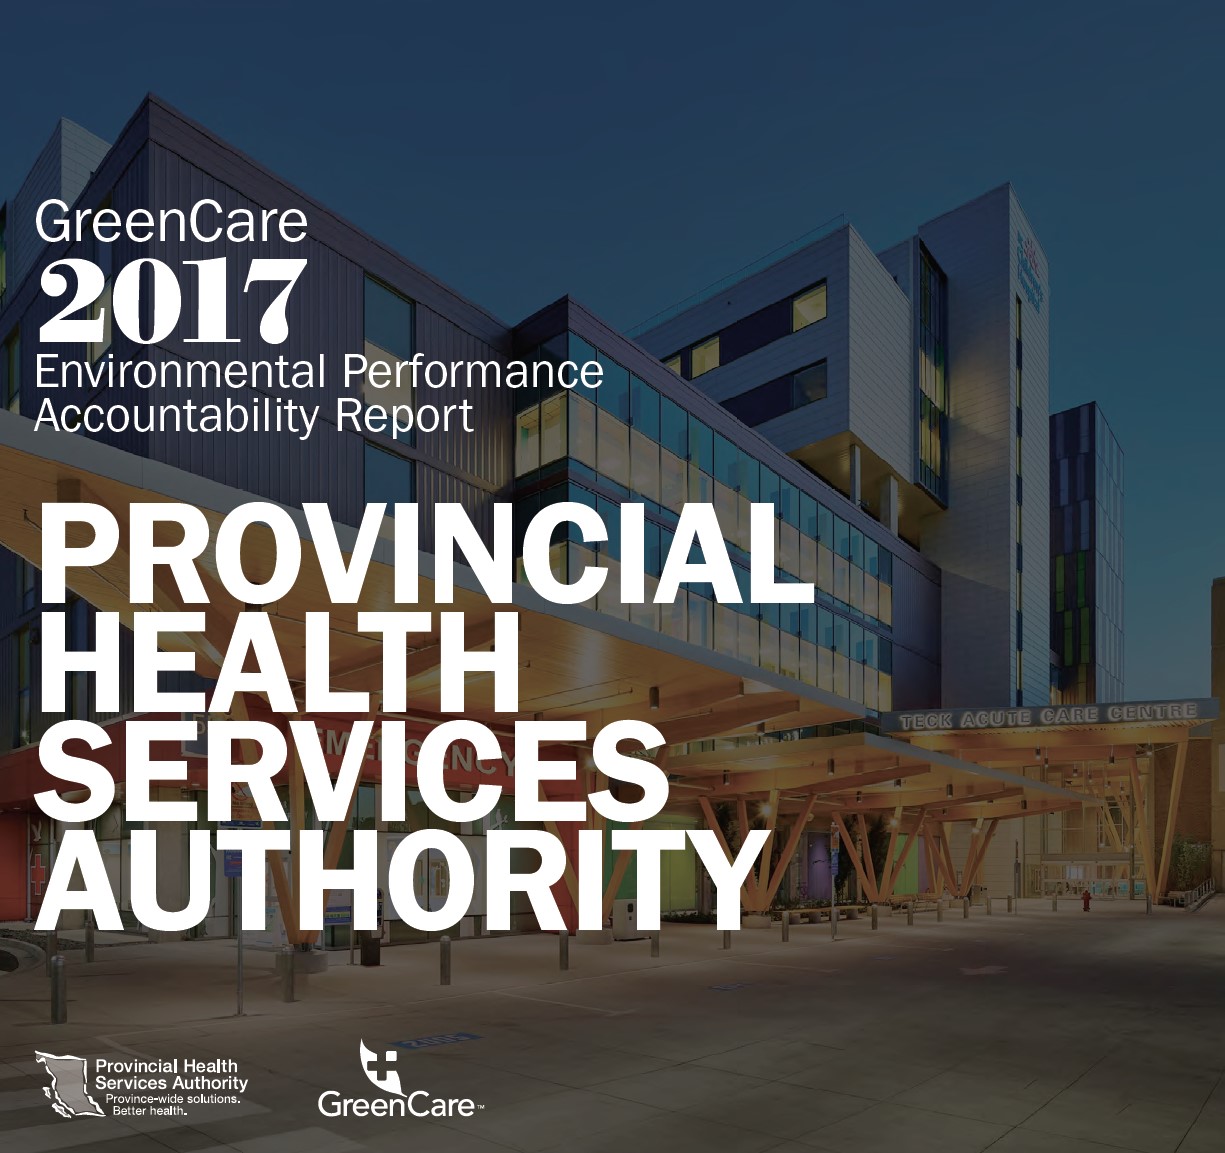 2017 Environmental Performance Accountability Report for PHSA